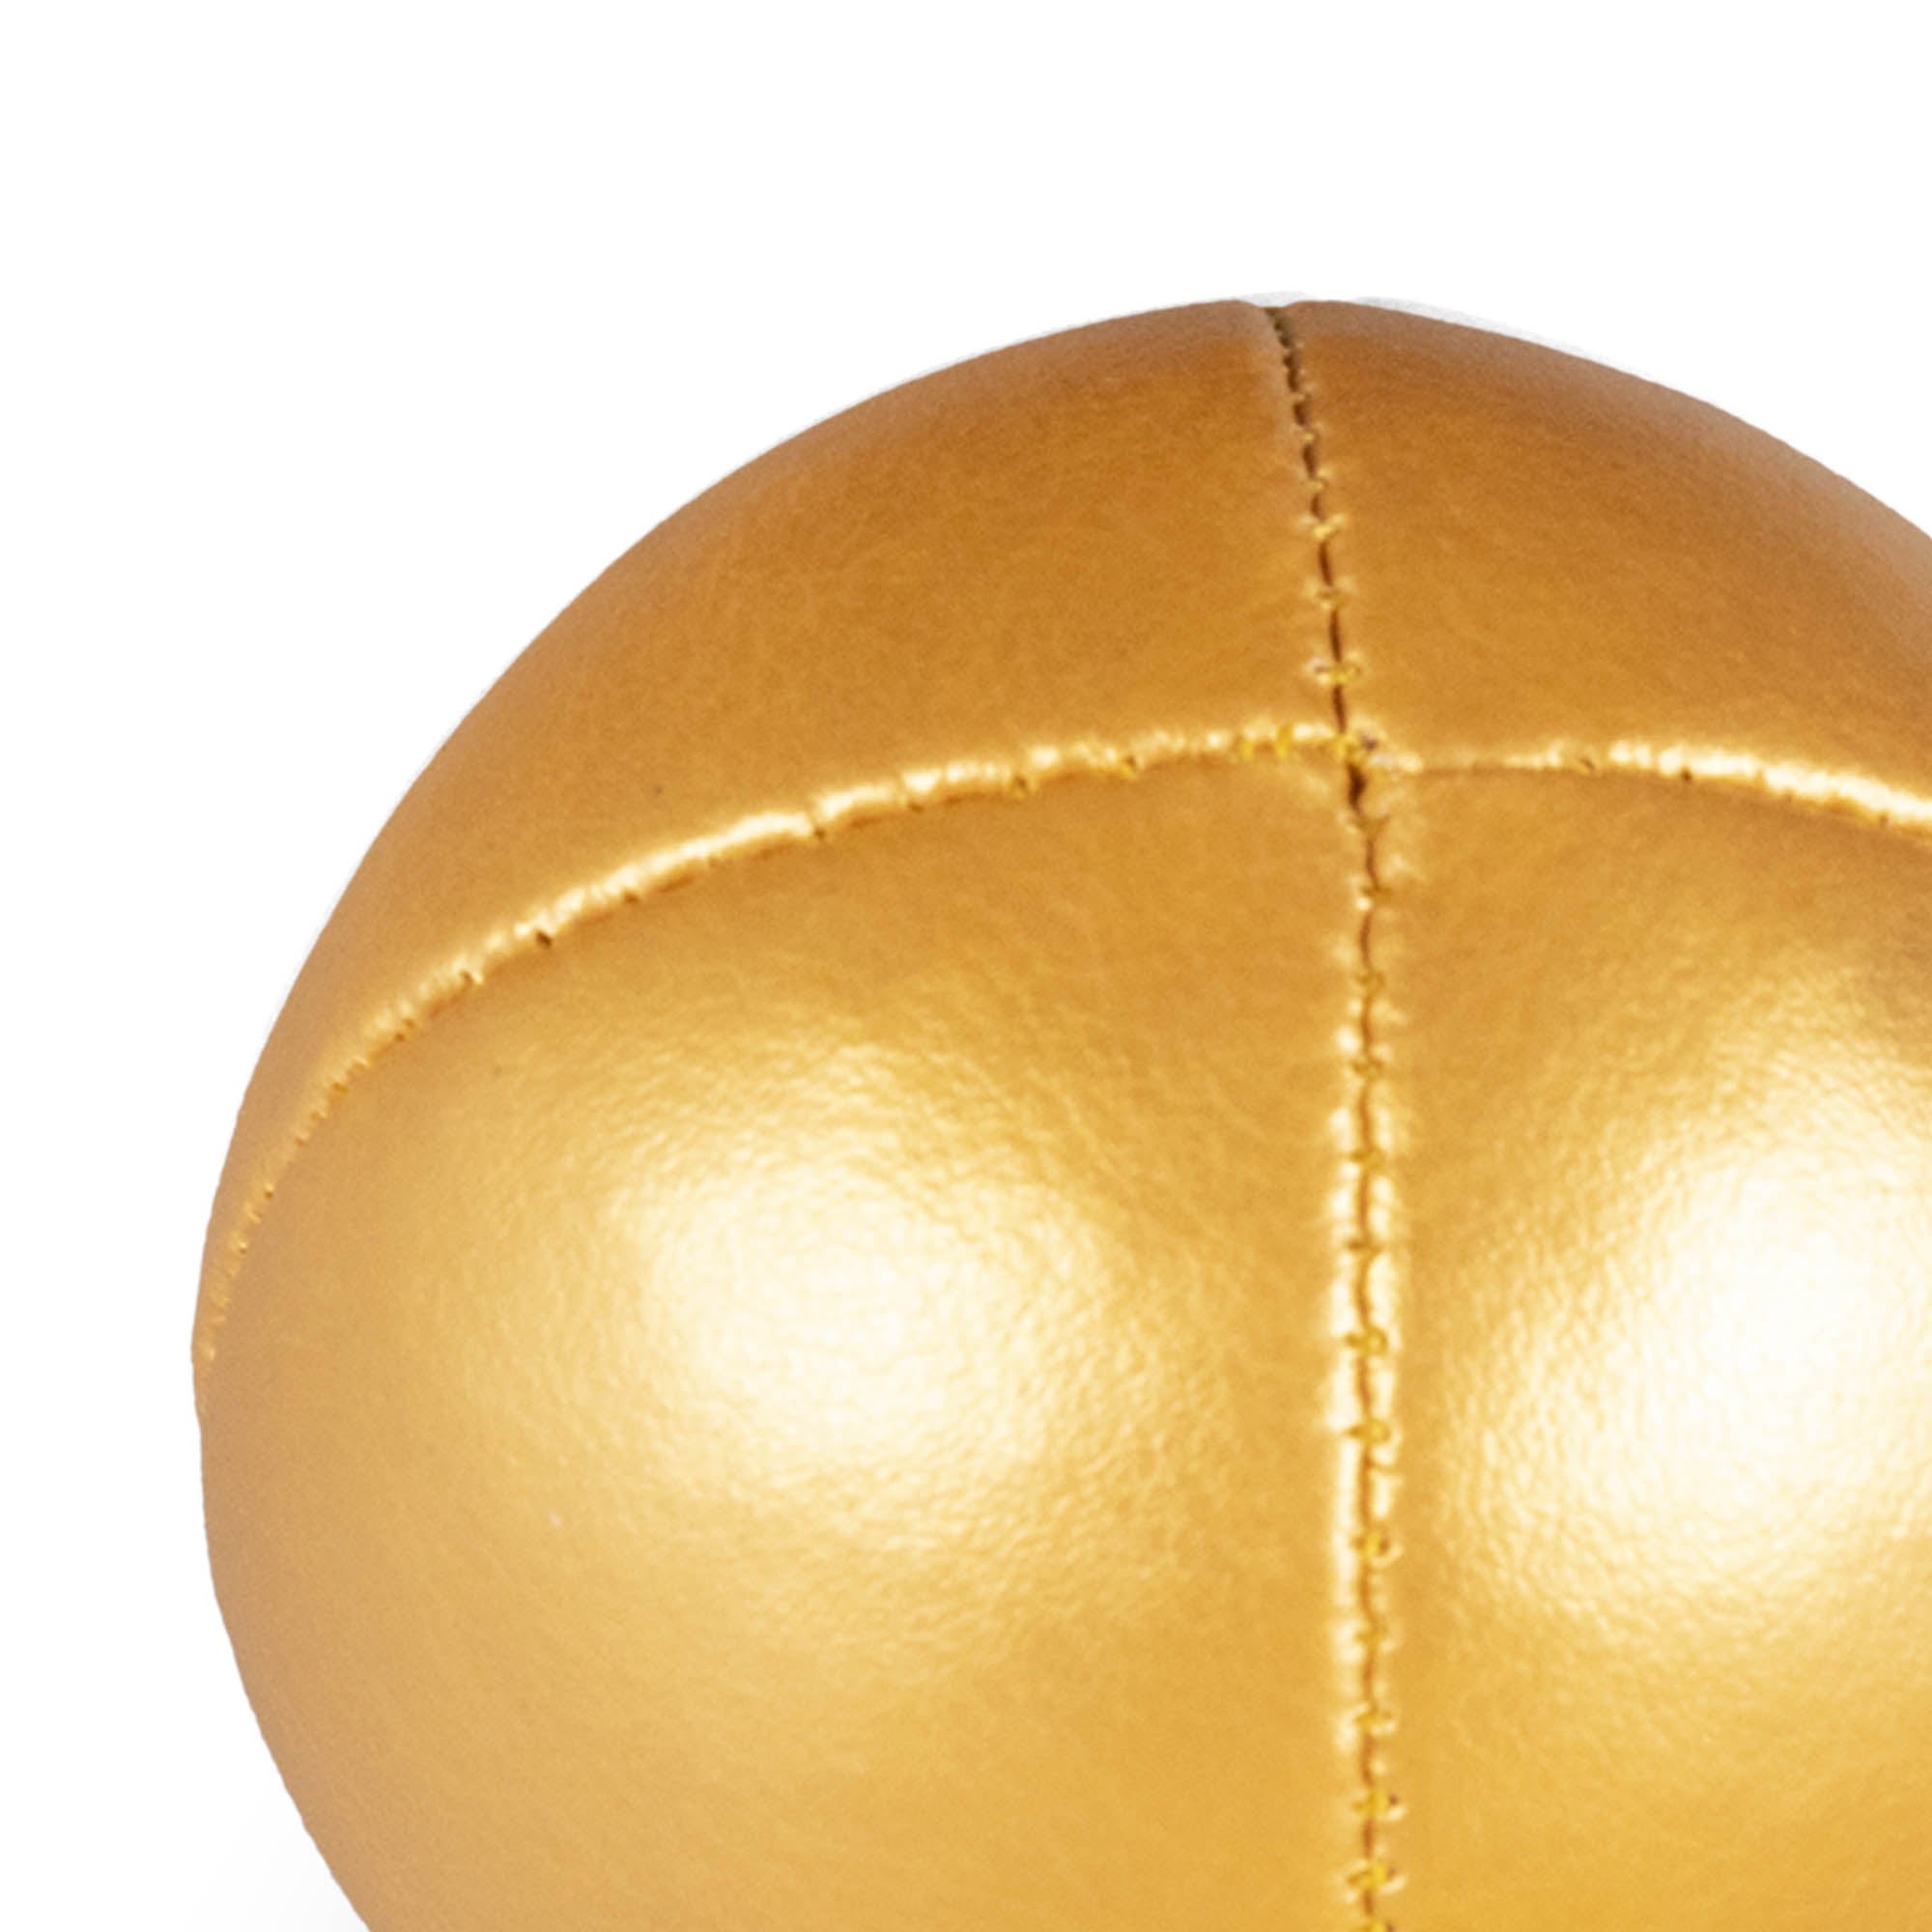 gold ball close up